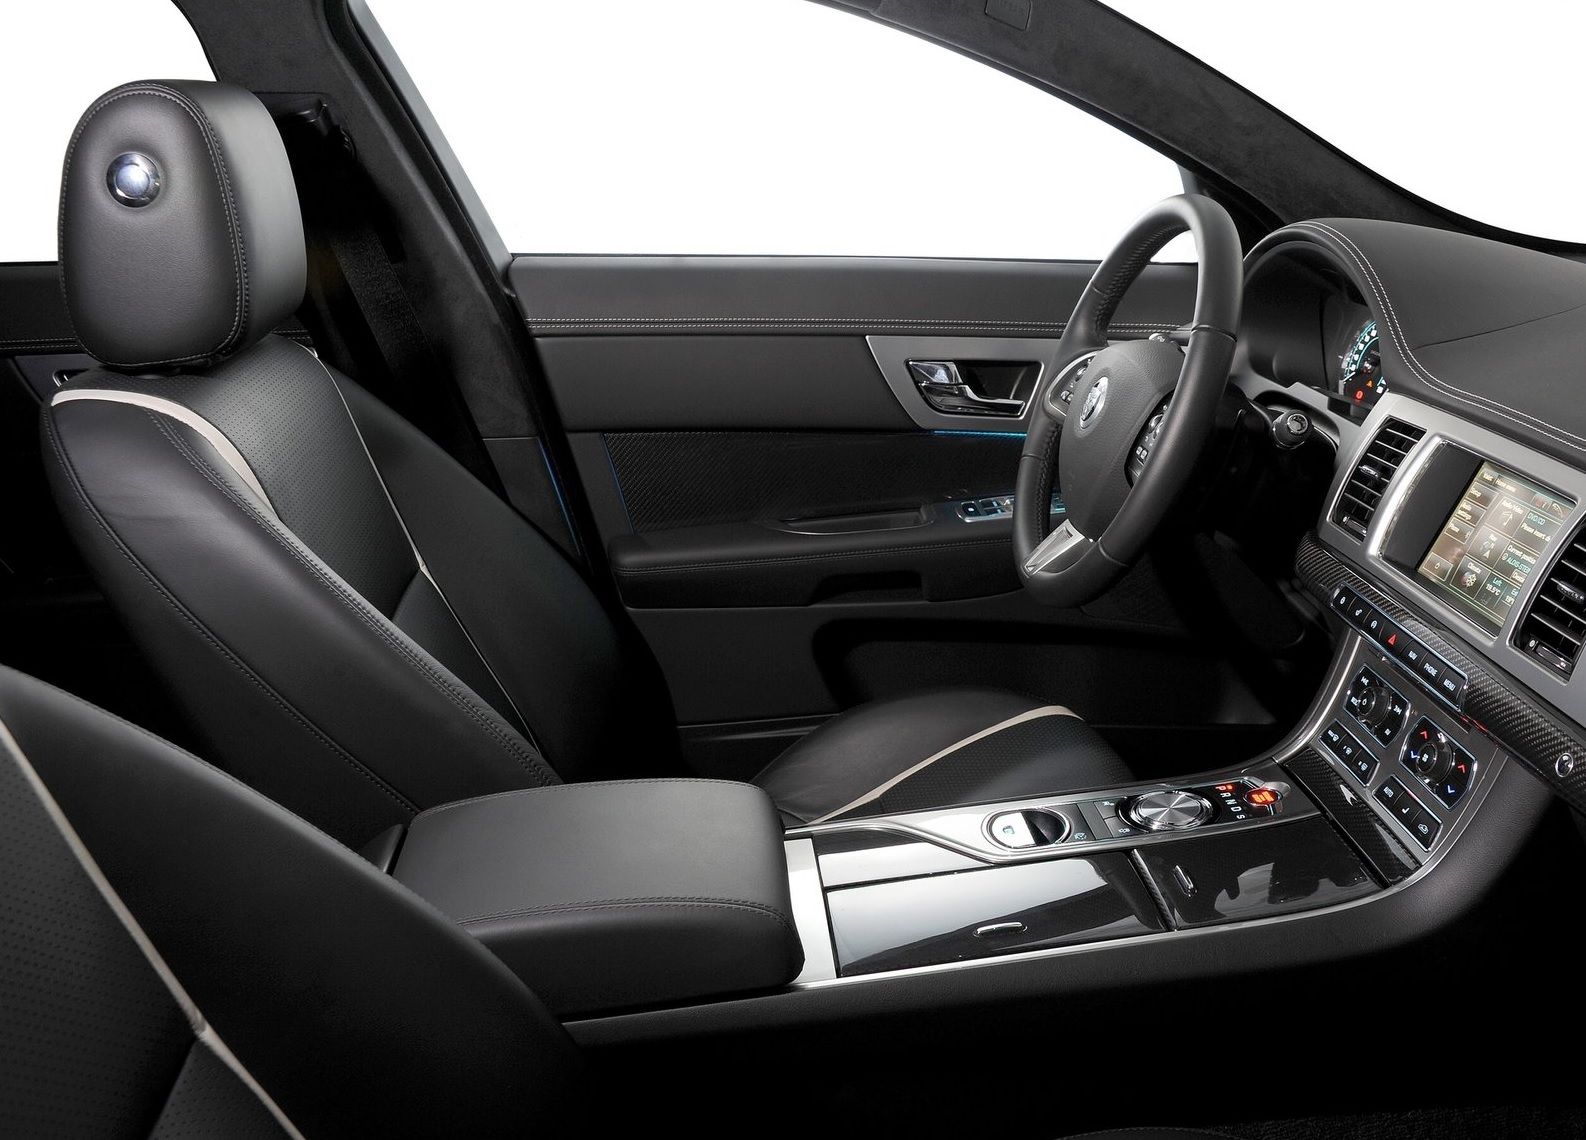 2012 Jaguar XF Interior Front Row